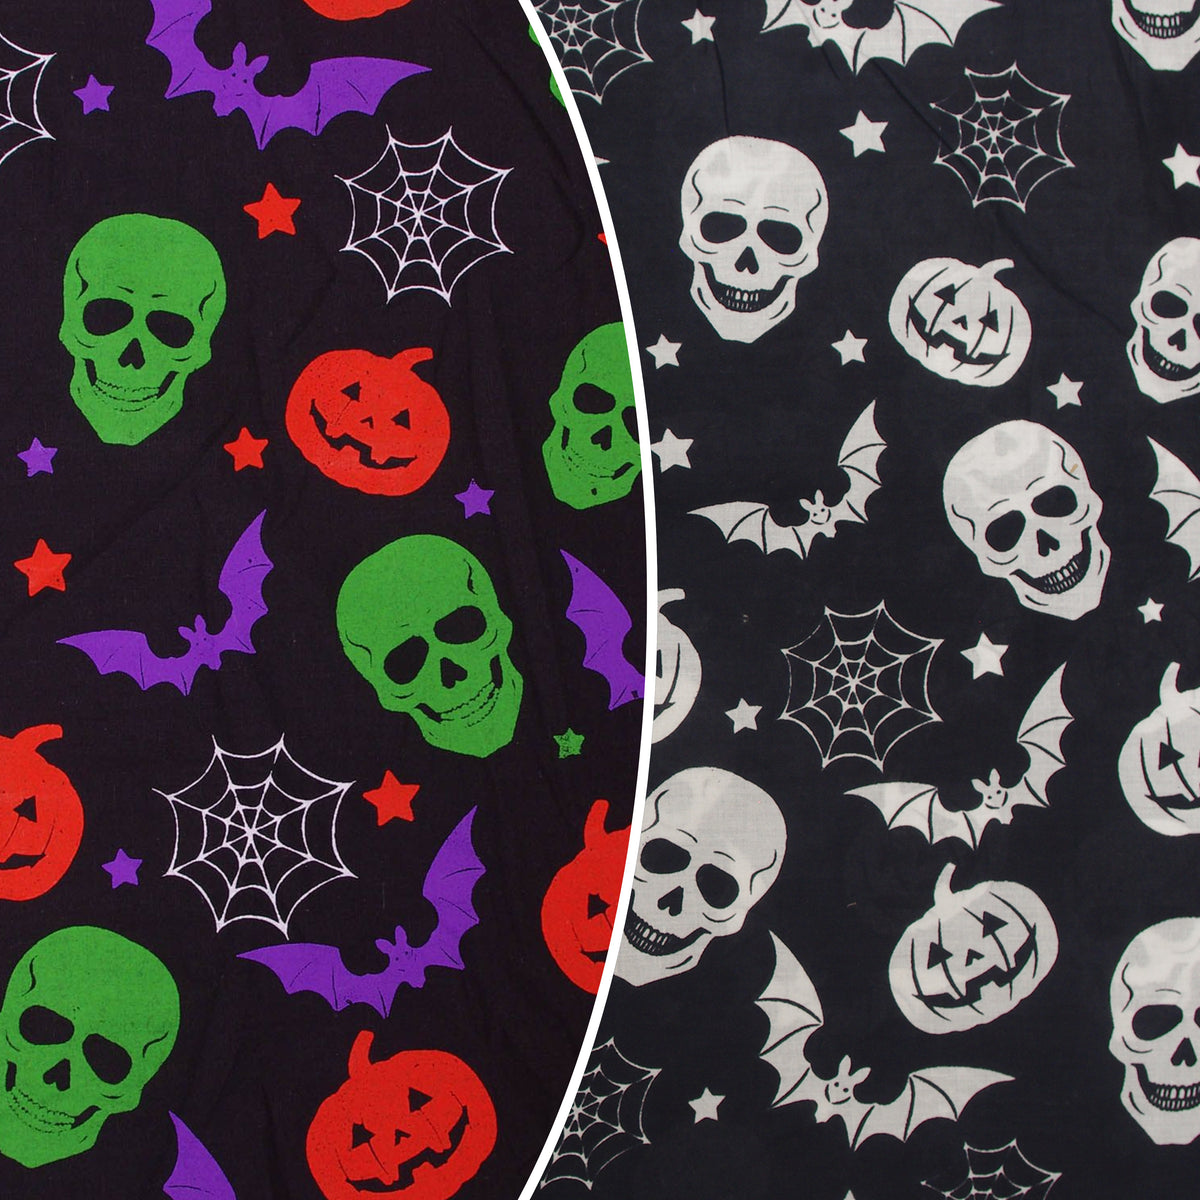 Halloween Cotton Spooky Scary Skulls, Pumpkins ,Bats Fabric Cloth